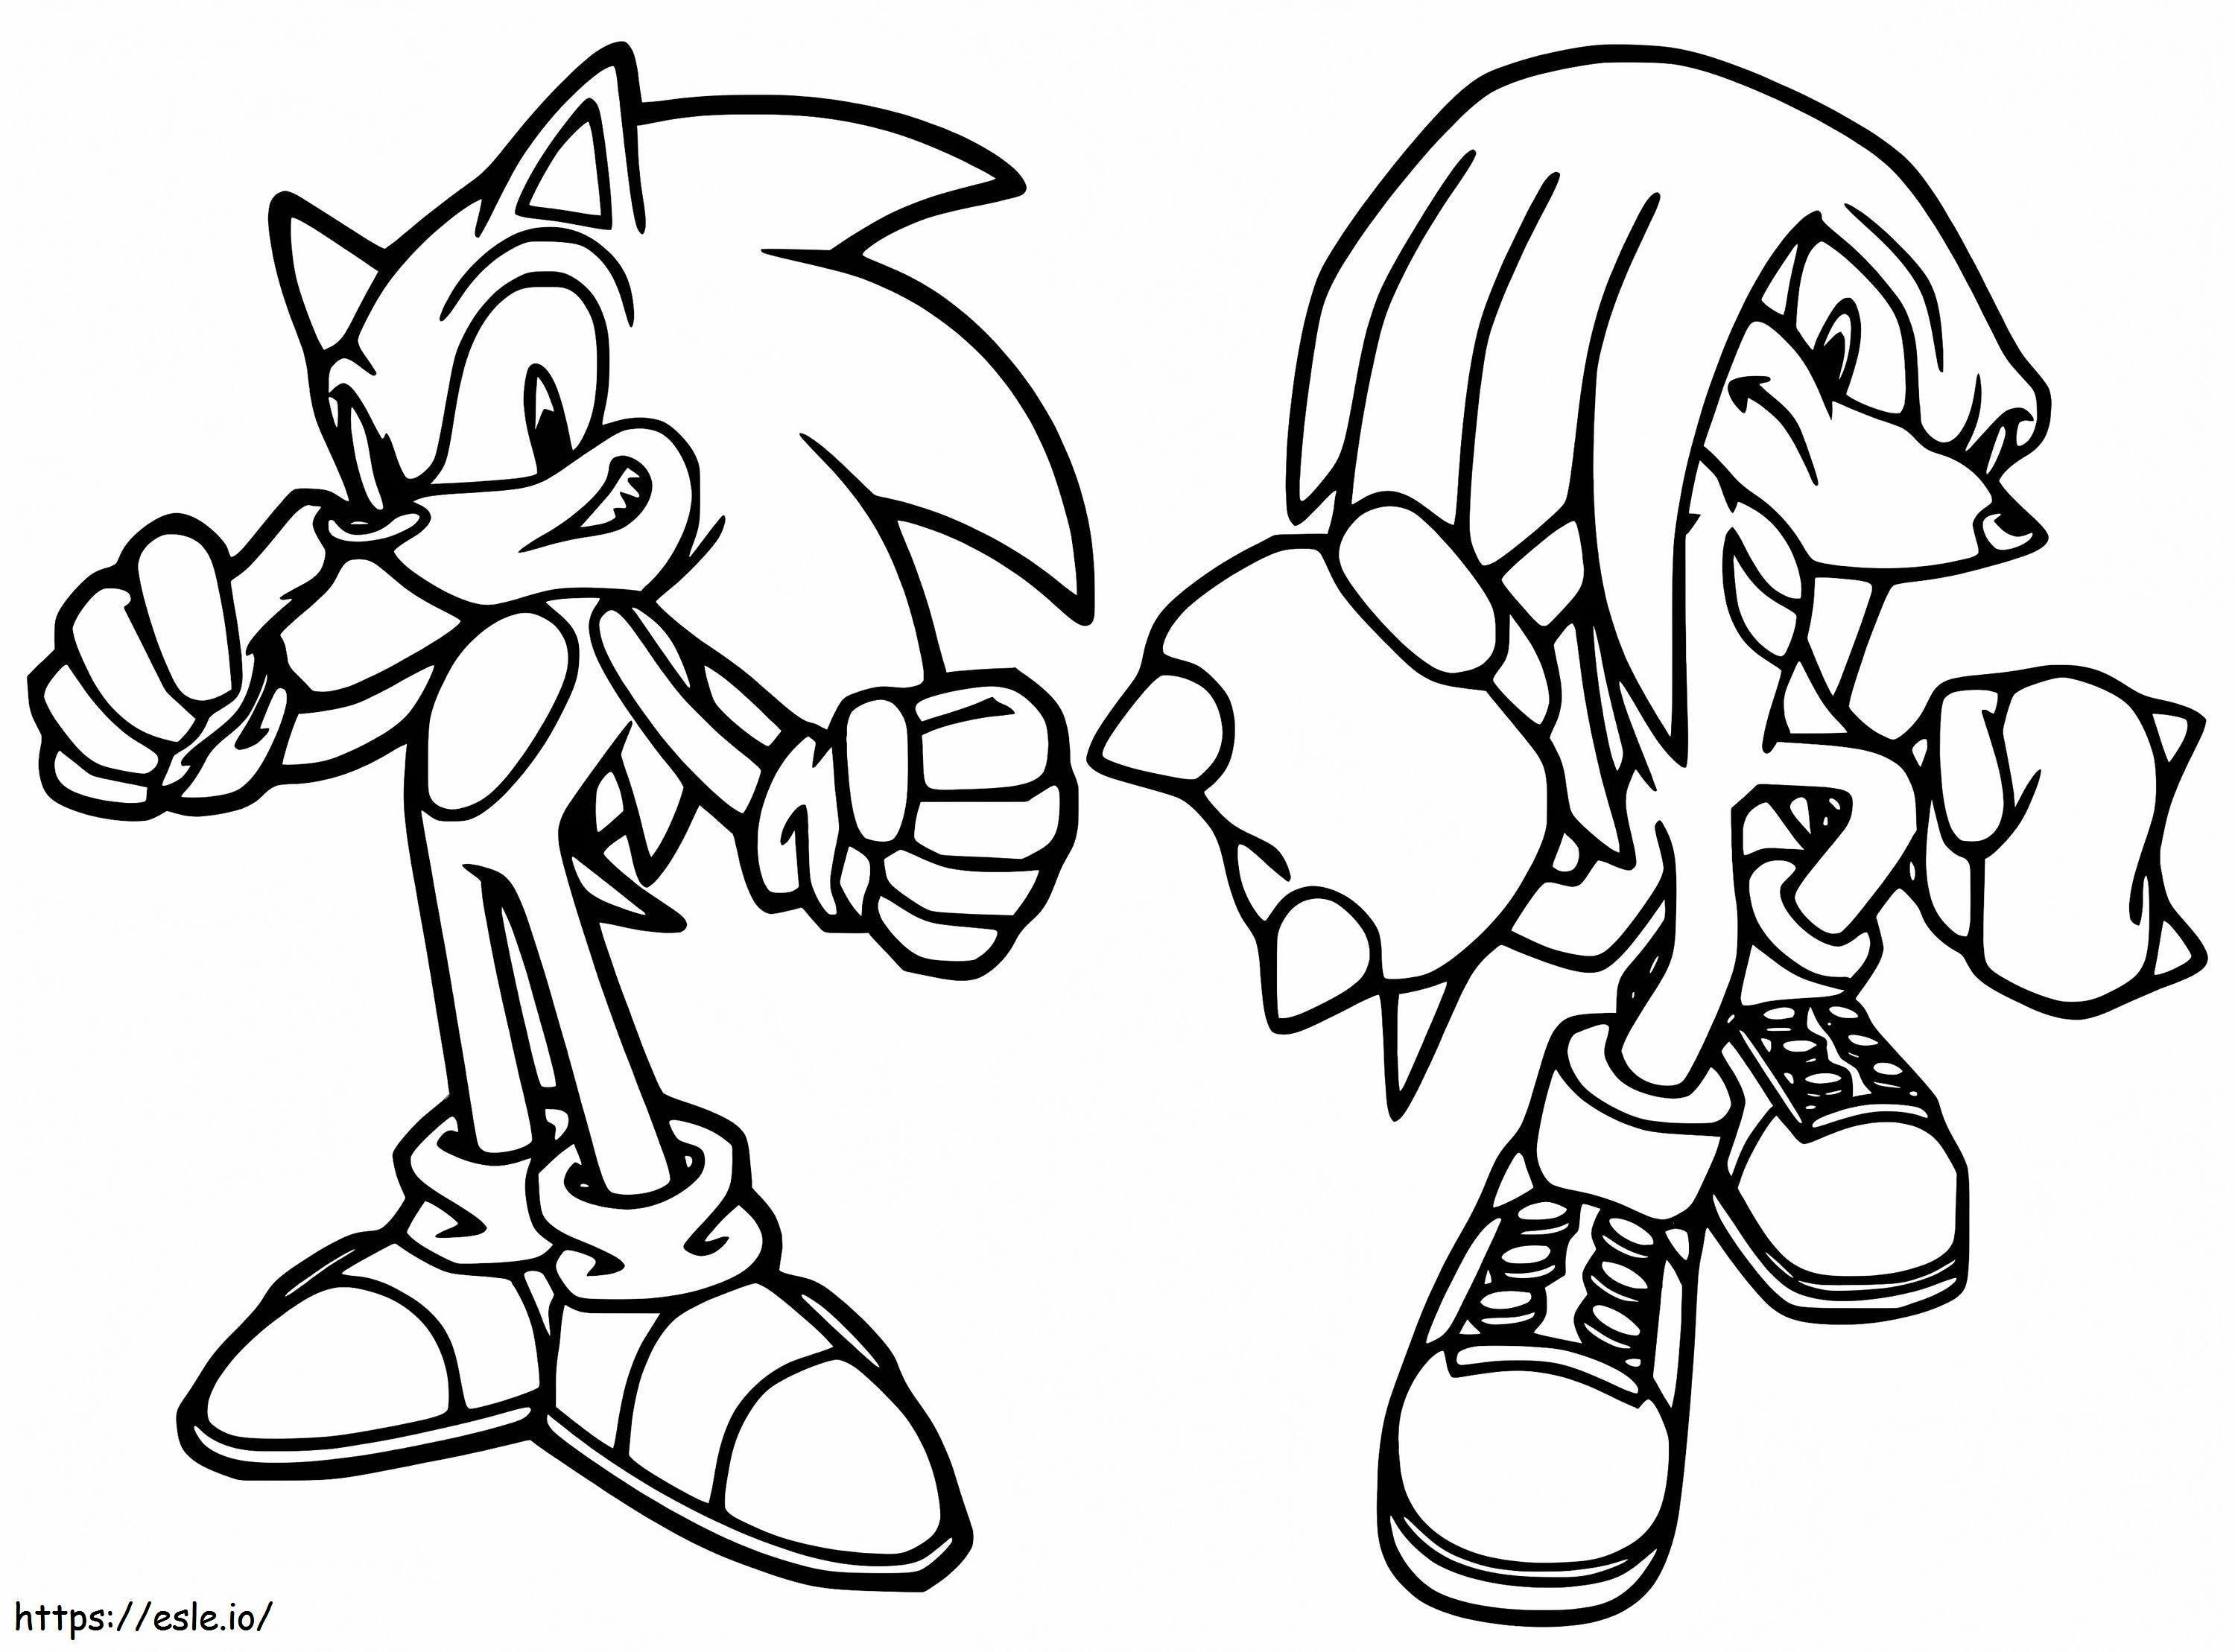 Sonic And Knuckles kifestő